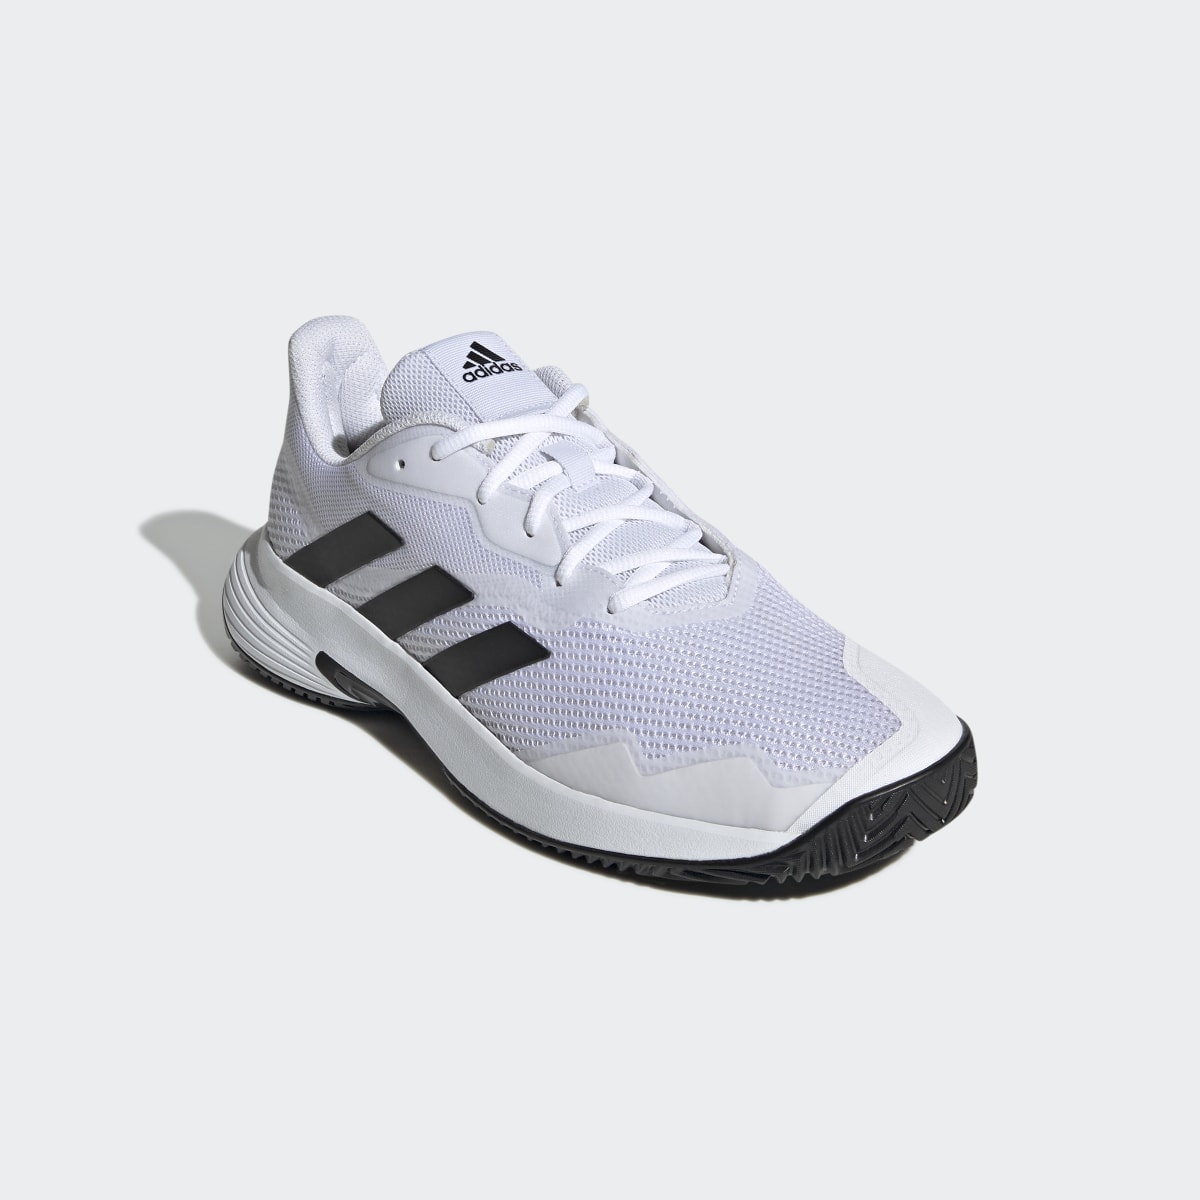 Adidas Courtjam Control Tennis Shoes. 8